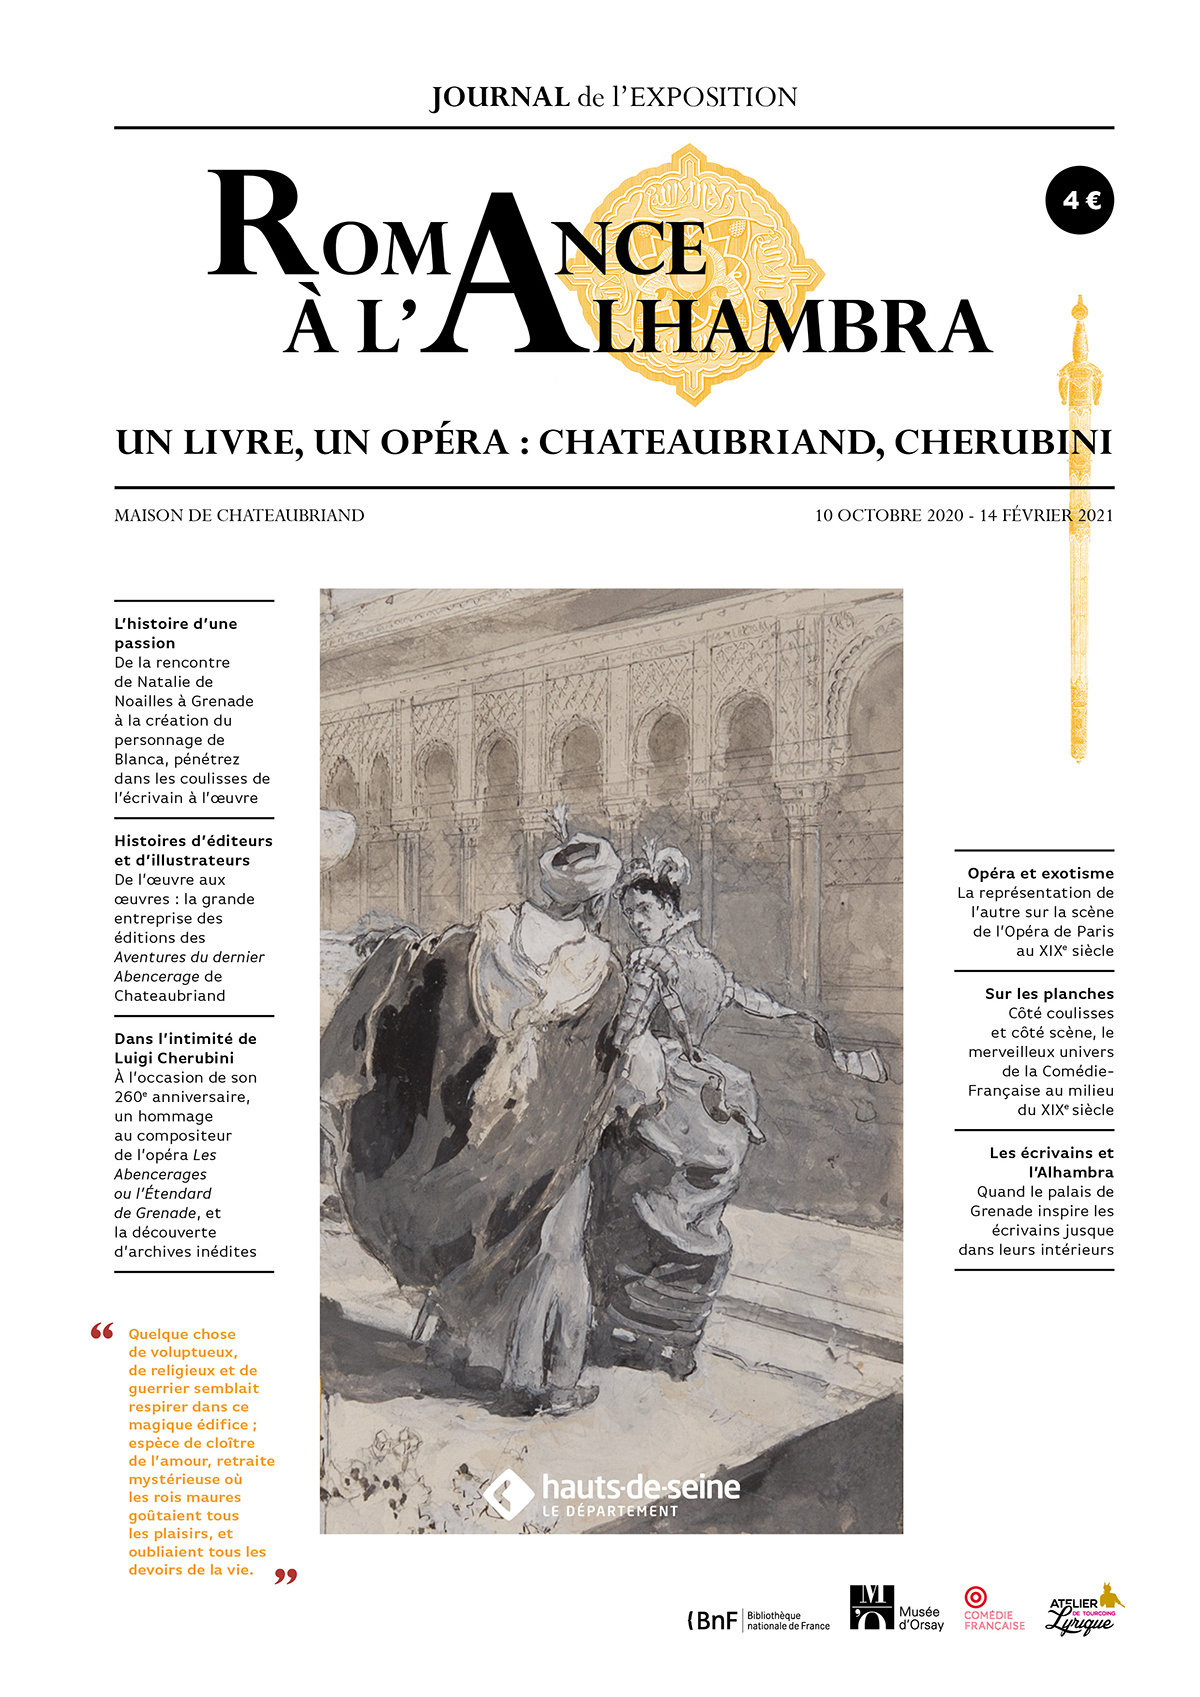 Couverture Journal exposition Romance Alhambra 1200px